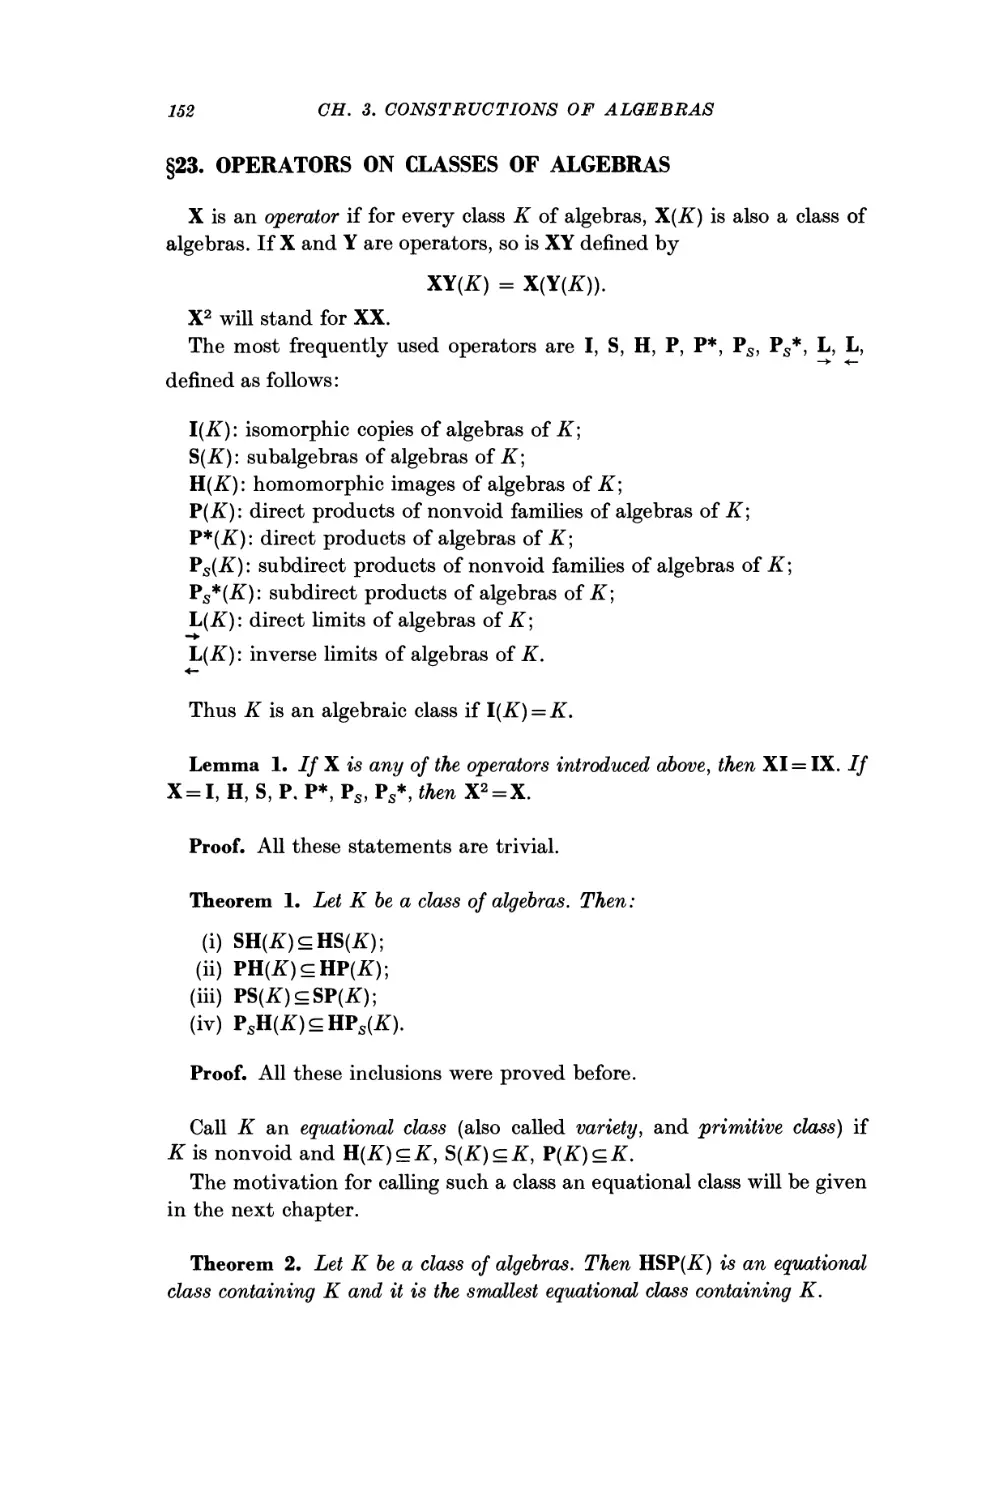 §23. Operators on Classes of Algebras